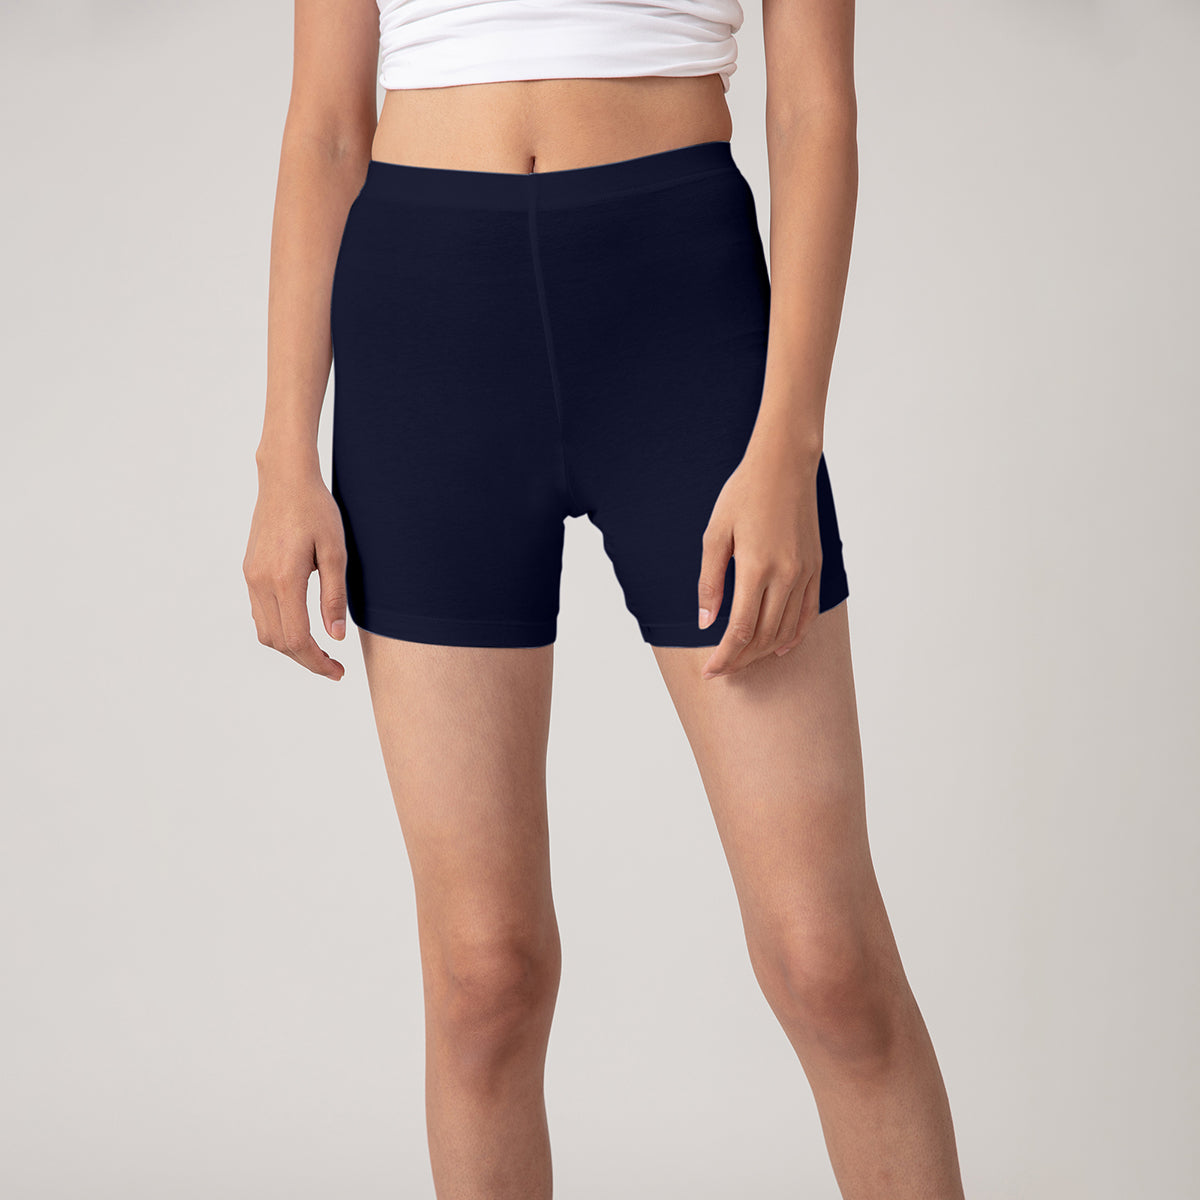 Nykd by Nykaa Stretch cotton cycling shorts - Navy NYP083